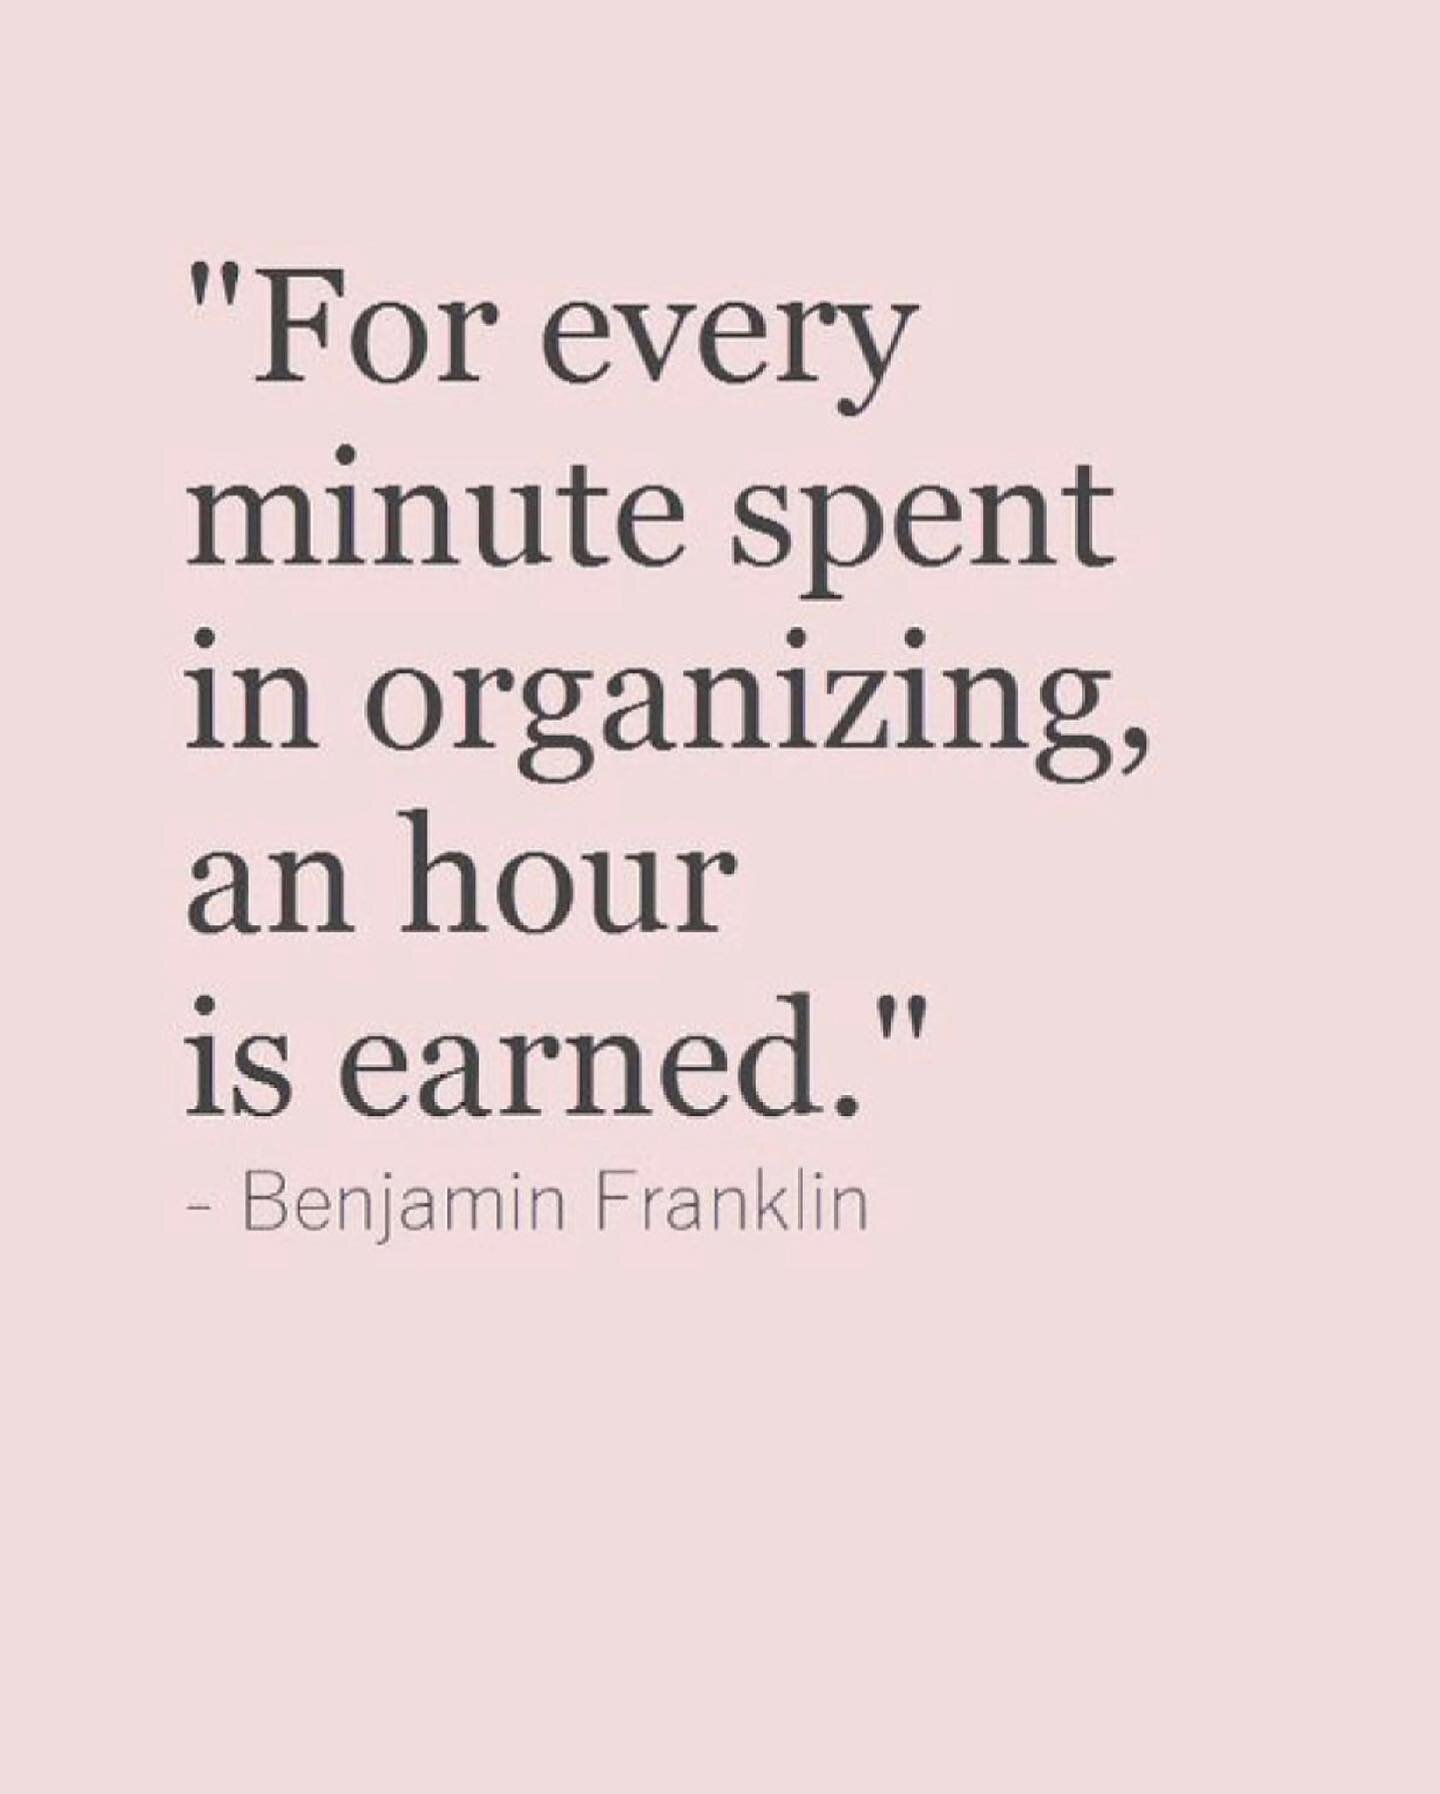 Wise words! Have a great weekend! 
.
.
#wisewords #wordsofwisdom #benjaminfranklin #organizing #professionalorganizer #crosswellorganizing